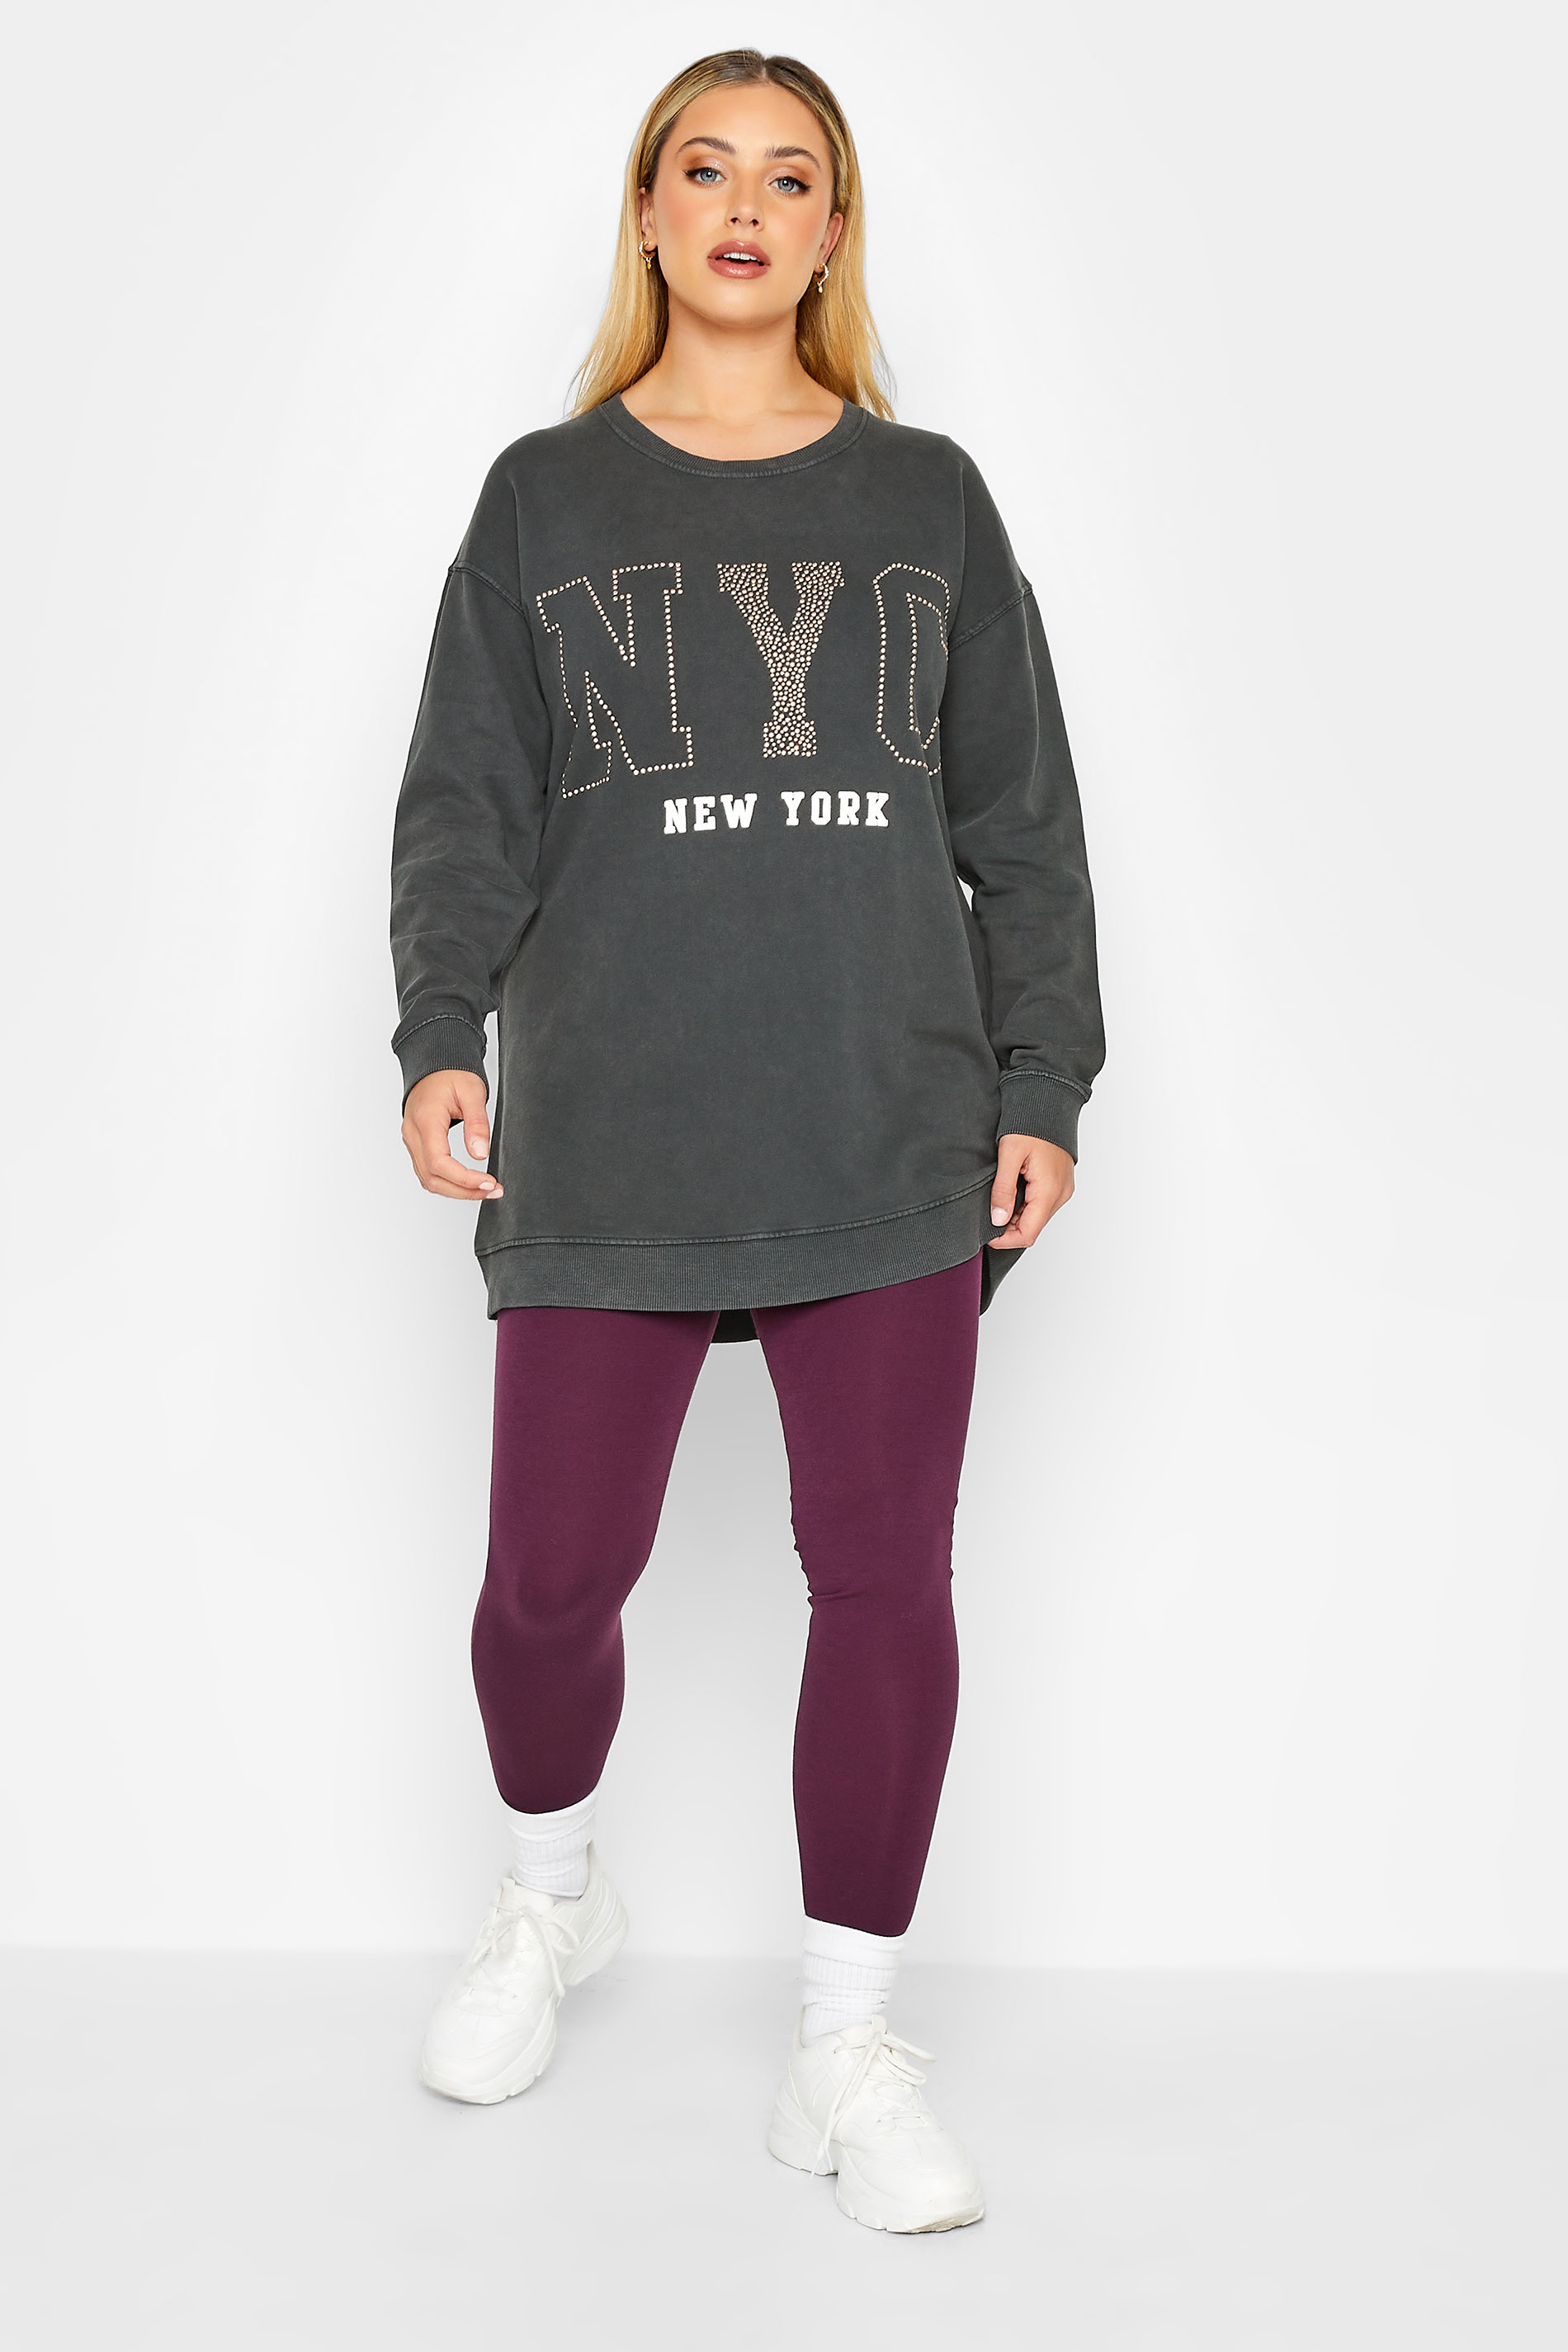 YOURS LUXURY Plus Size Grey Acid Wash 'NYC' Stud Embellished Sweatshirt | Yours Clothing 3